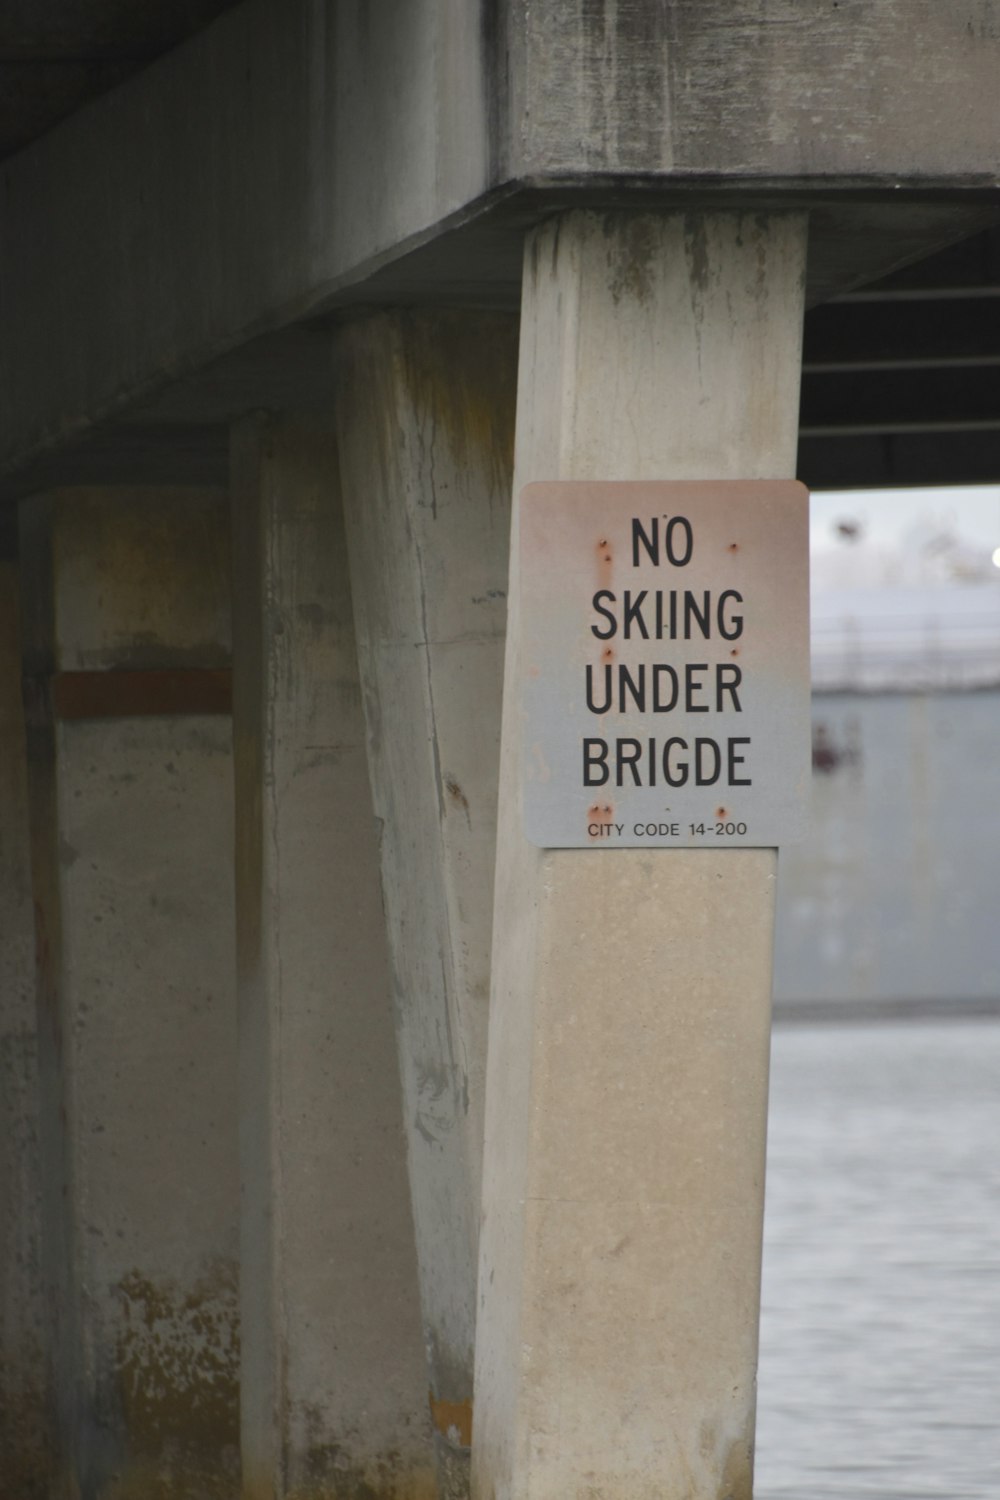 a no skiing under bridge sign under a bridge